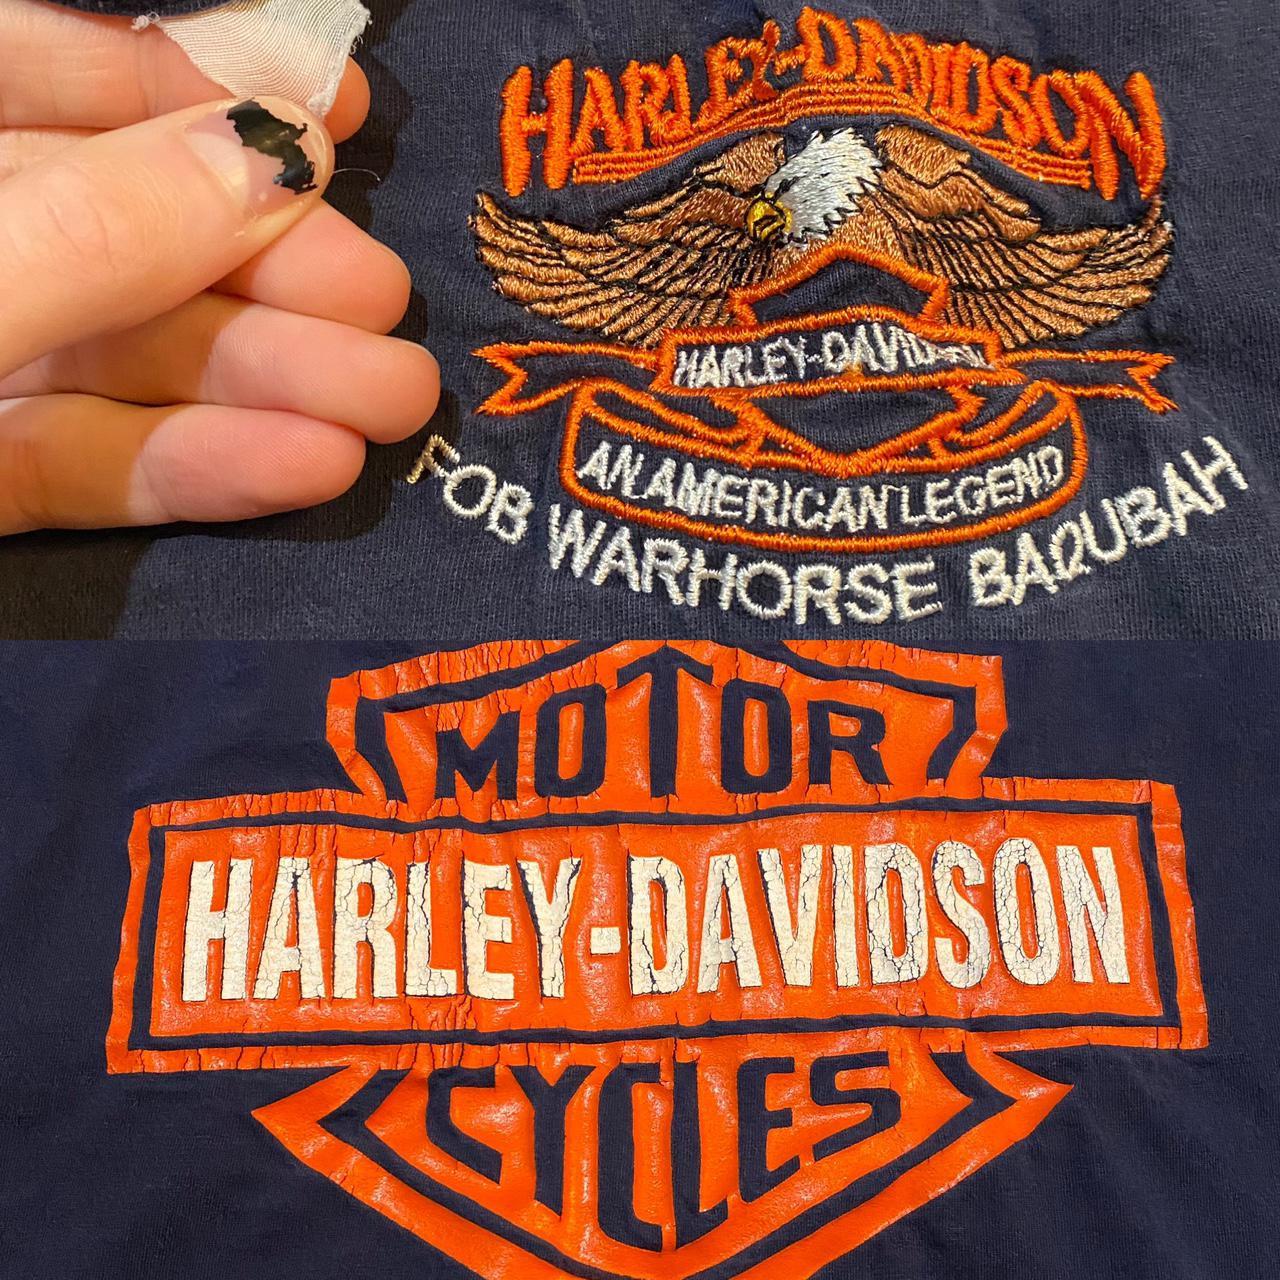 Harley Davidson Men's Navy and Blue T-shirt (4)